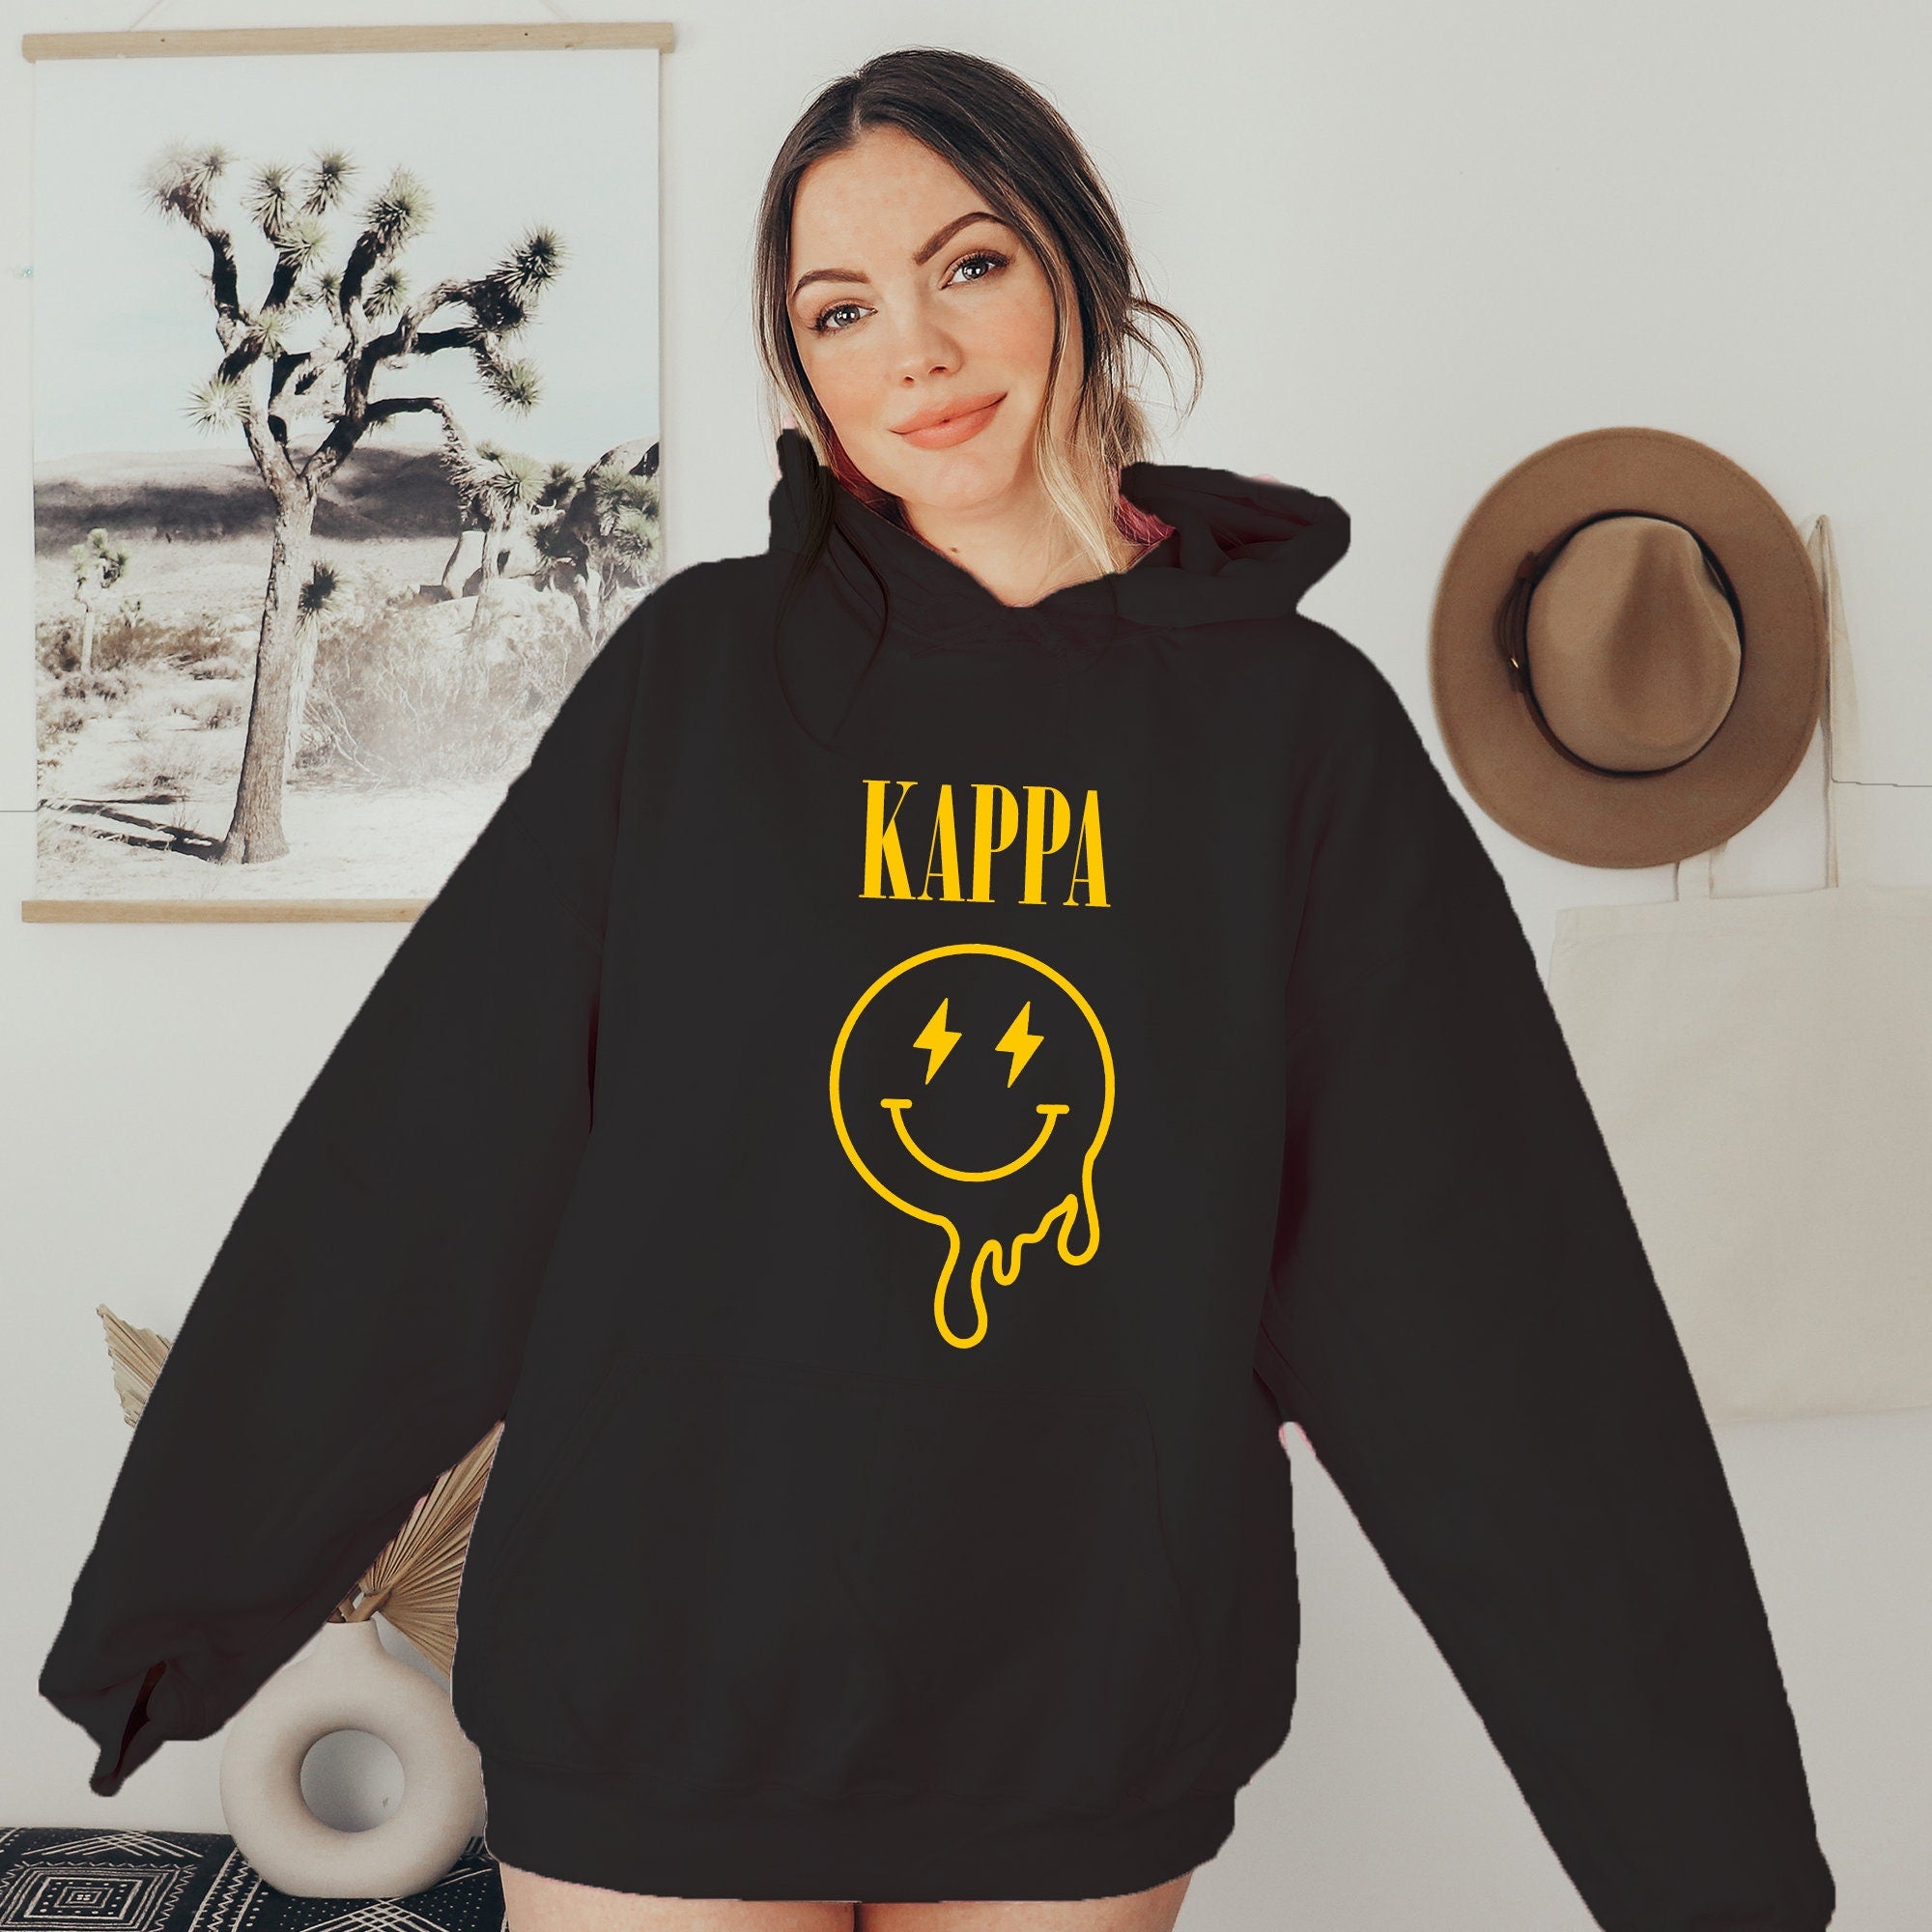 Kappa Kappa Gamma Dripping Smiley Face Sweatsuit - Go Greek Chic